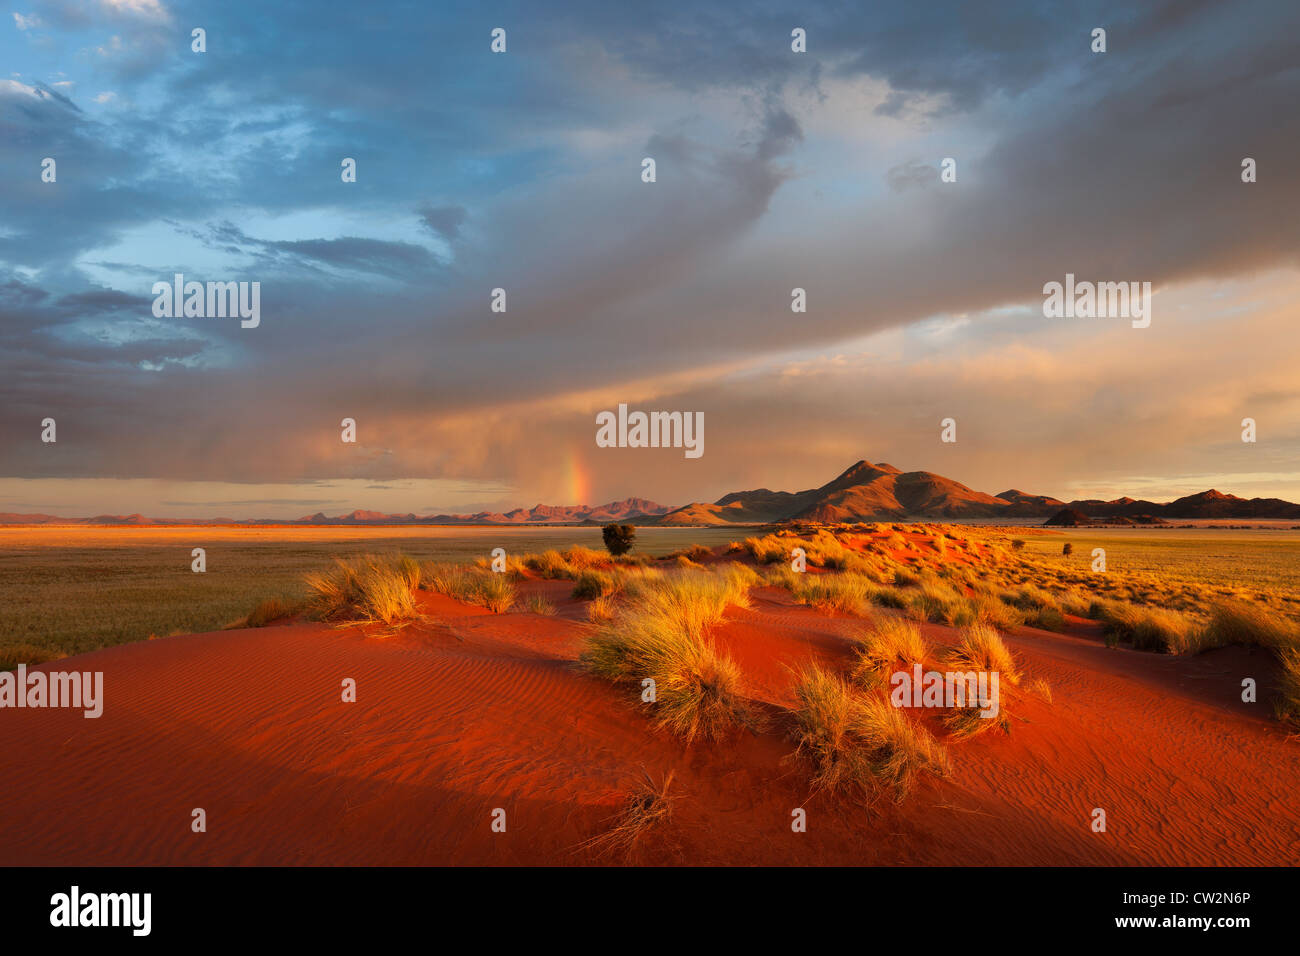 Puesta de sol paisaje mostrando la ecología única del sur-oeste del desierto de Namib o pro -Namib. NamibRand Nature Reserve, Namibia Foto de stock